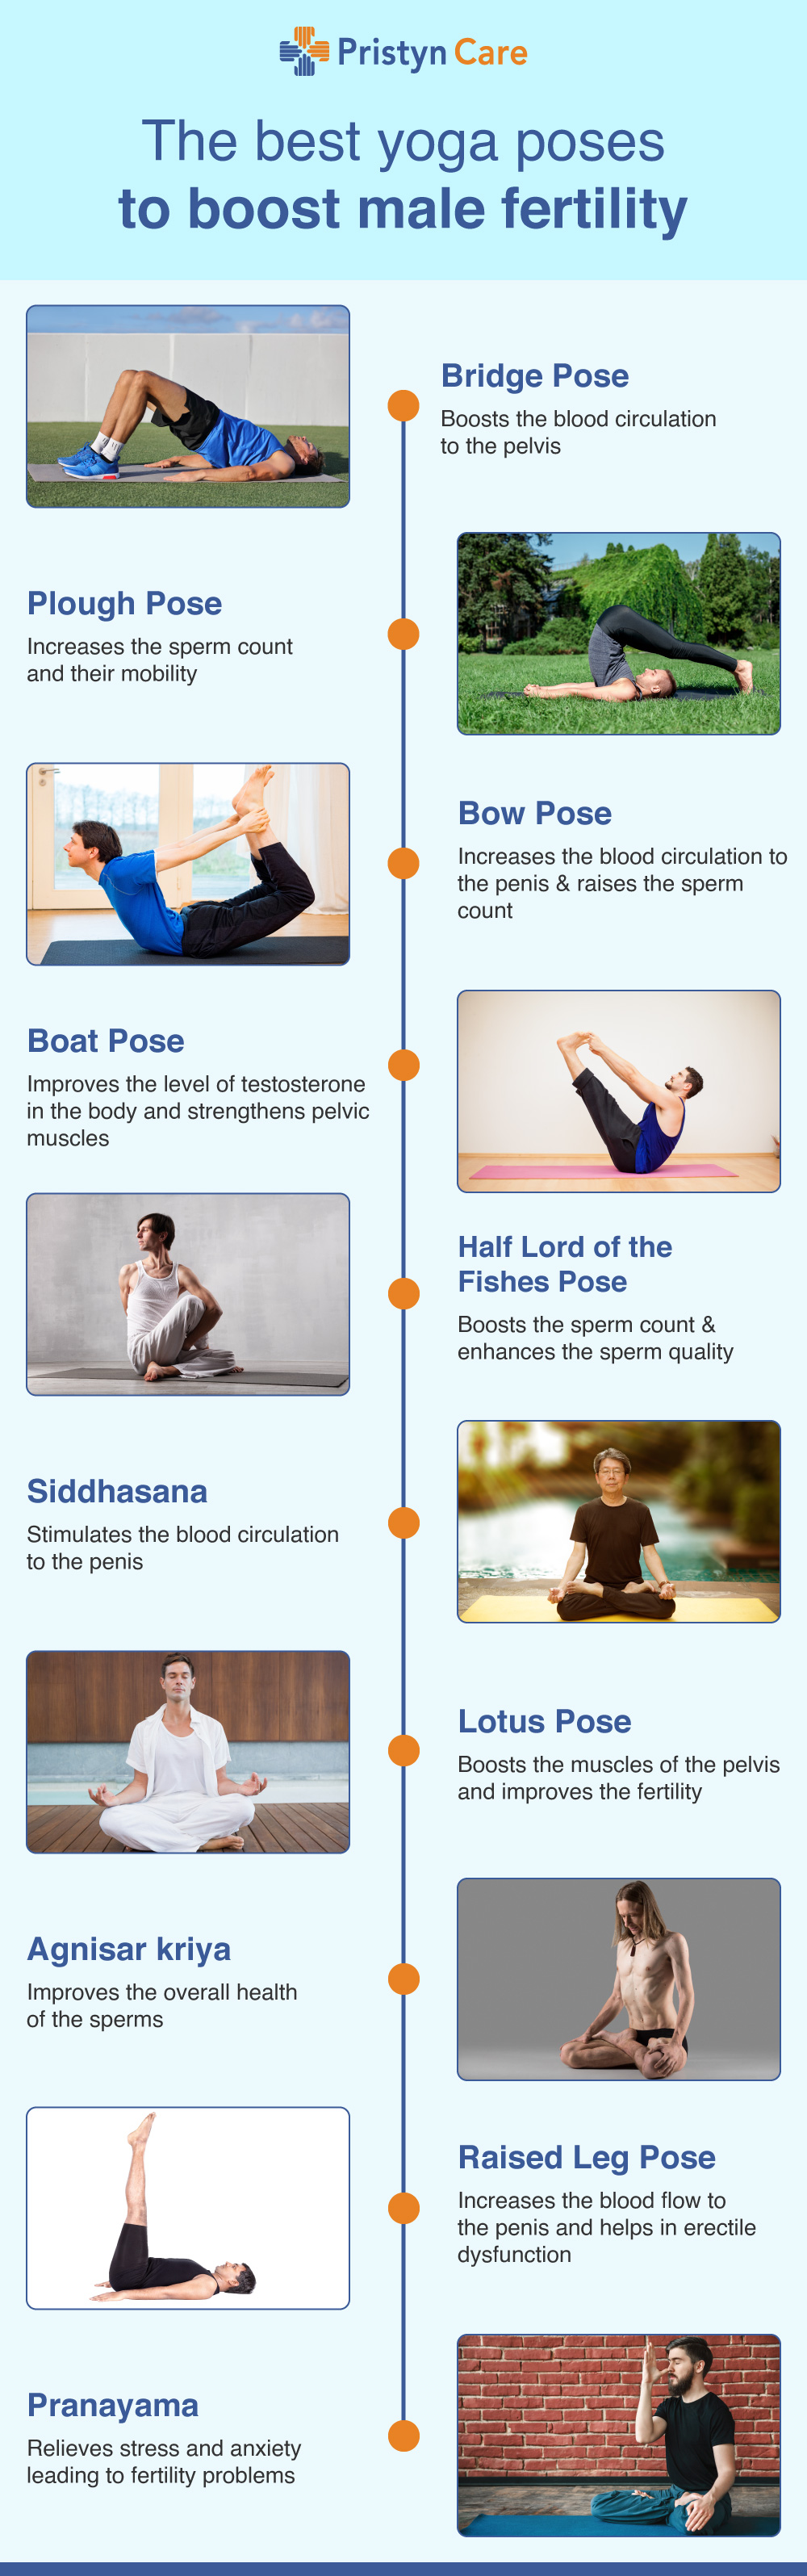 Yoga Asanas for Thyroid: 5 Poses to Improve Your Health